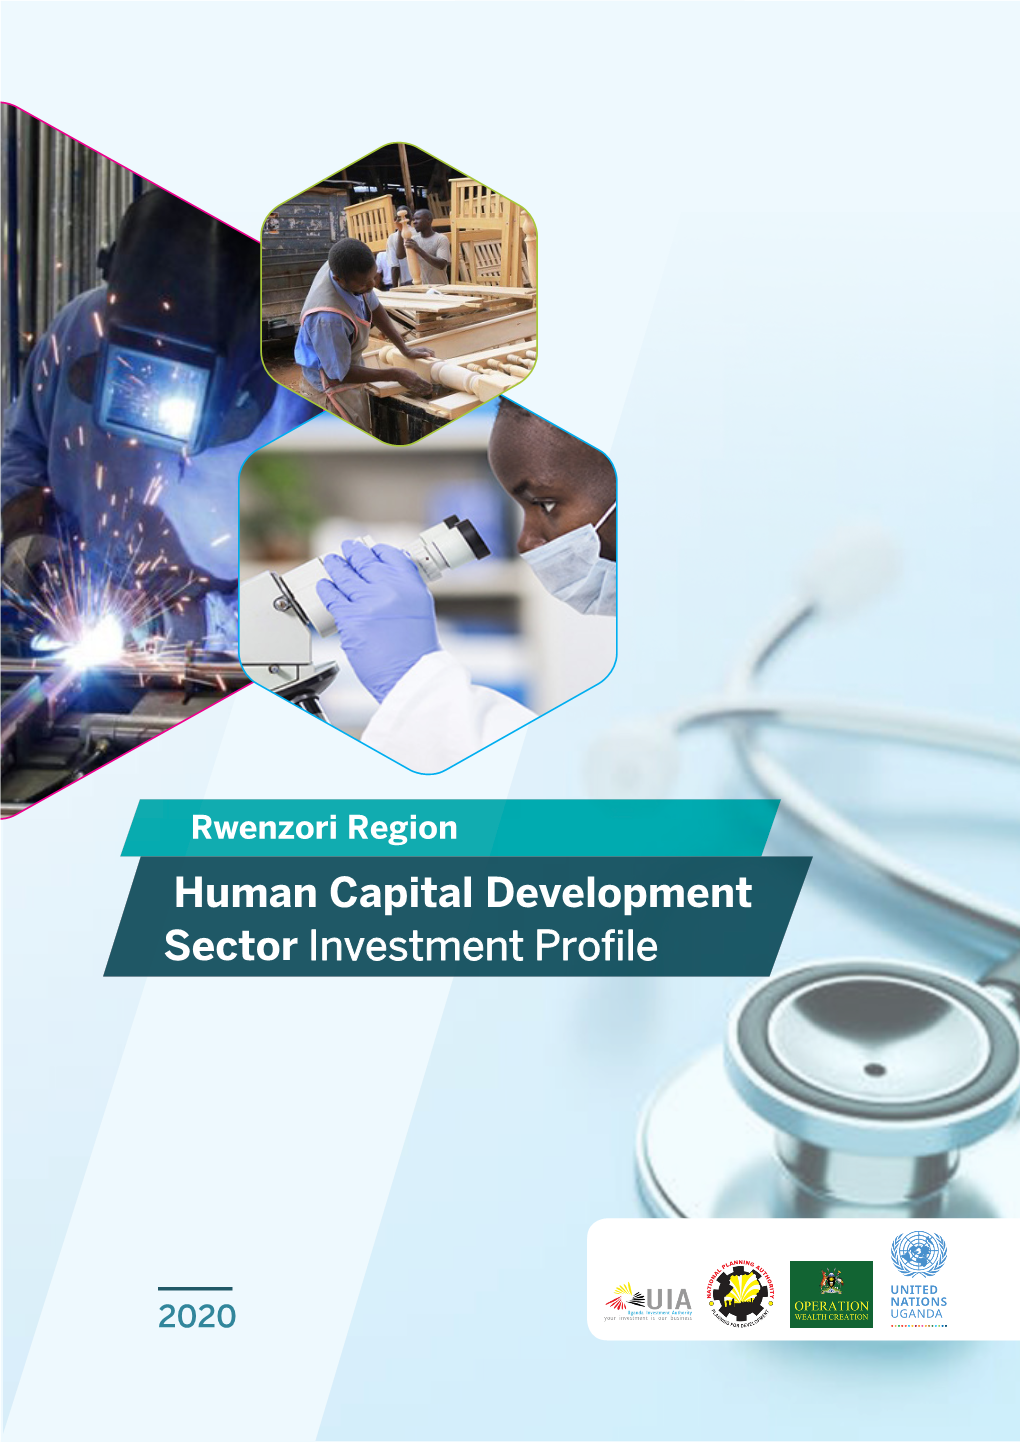 Rwenzori Region Human Capital Development Sector Investment Profile